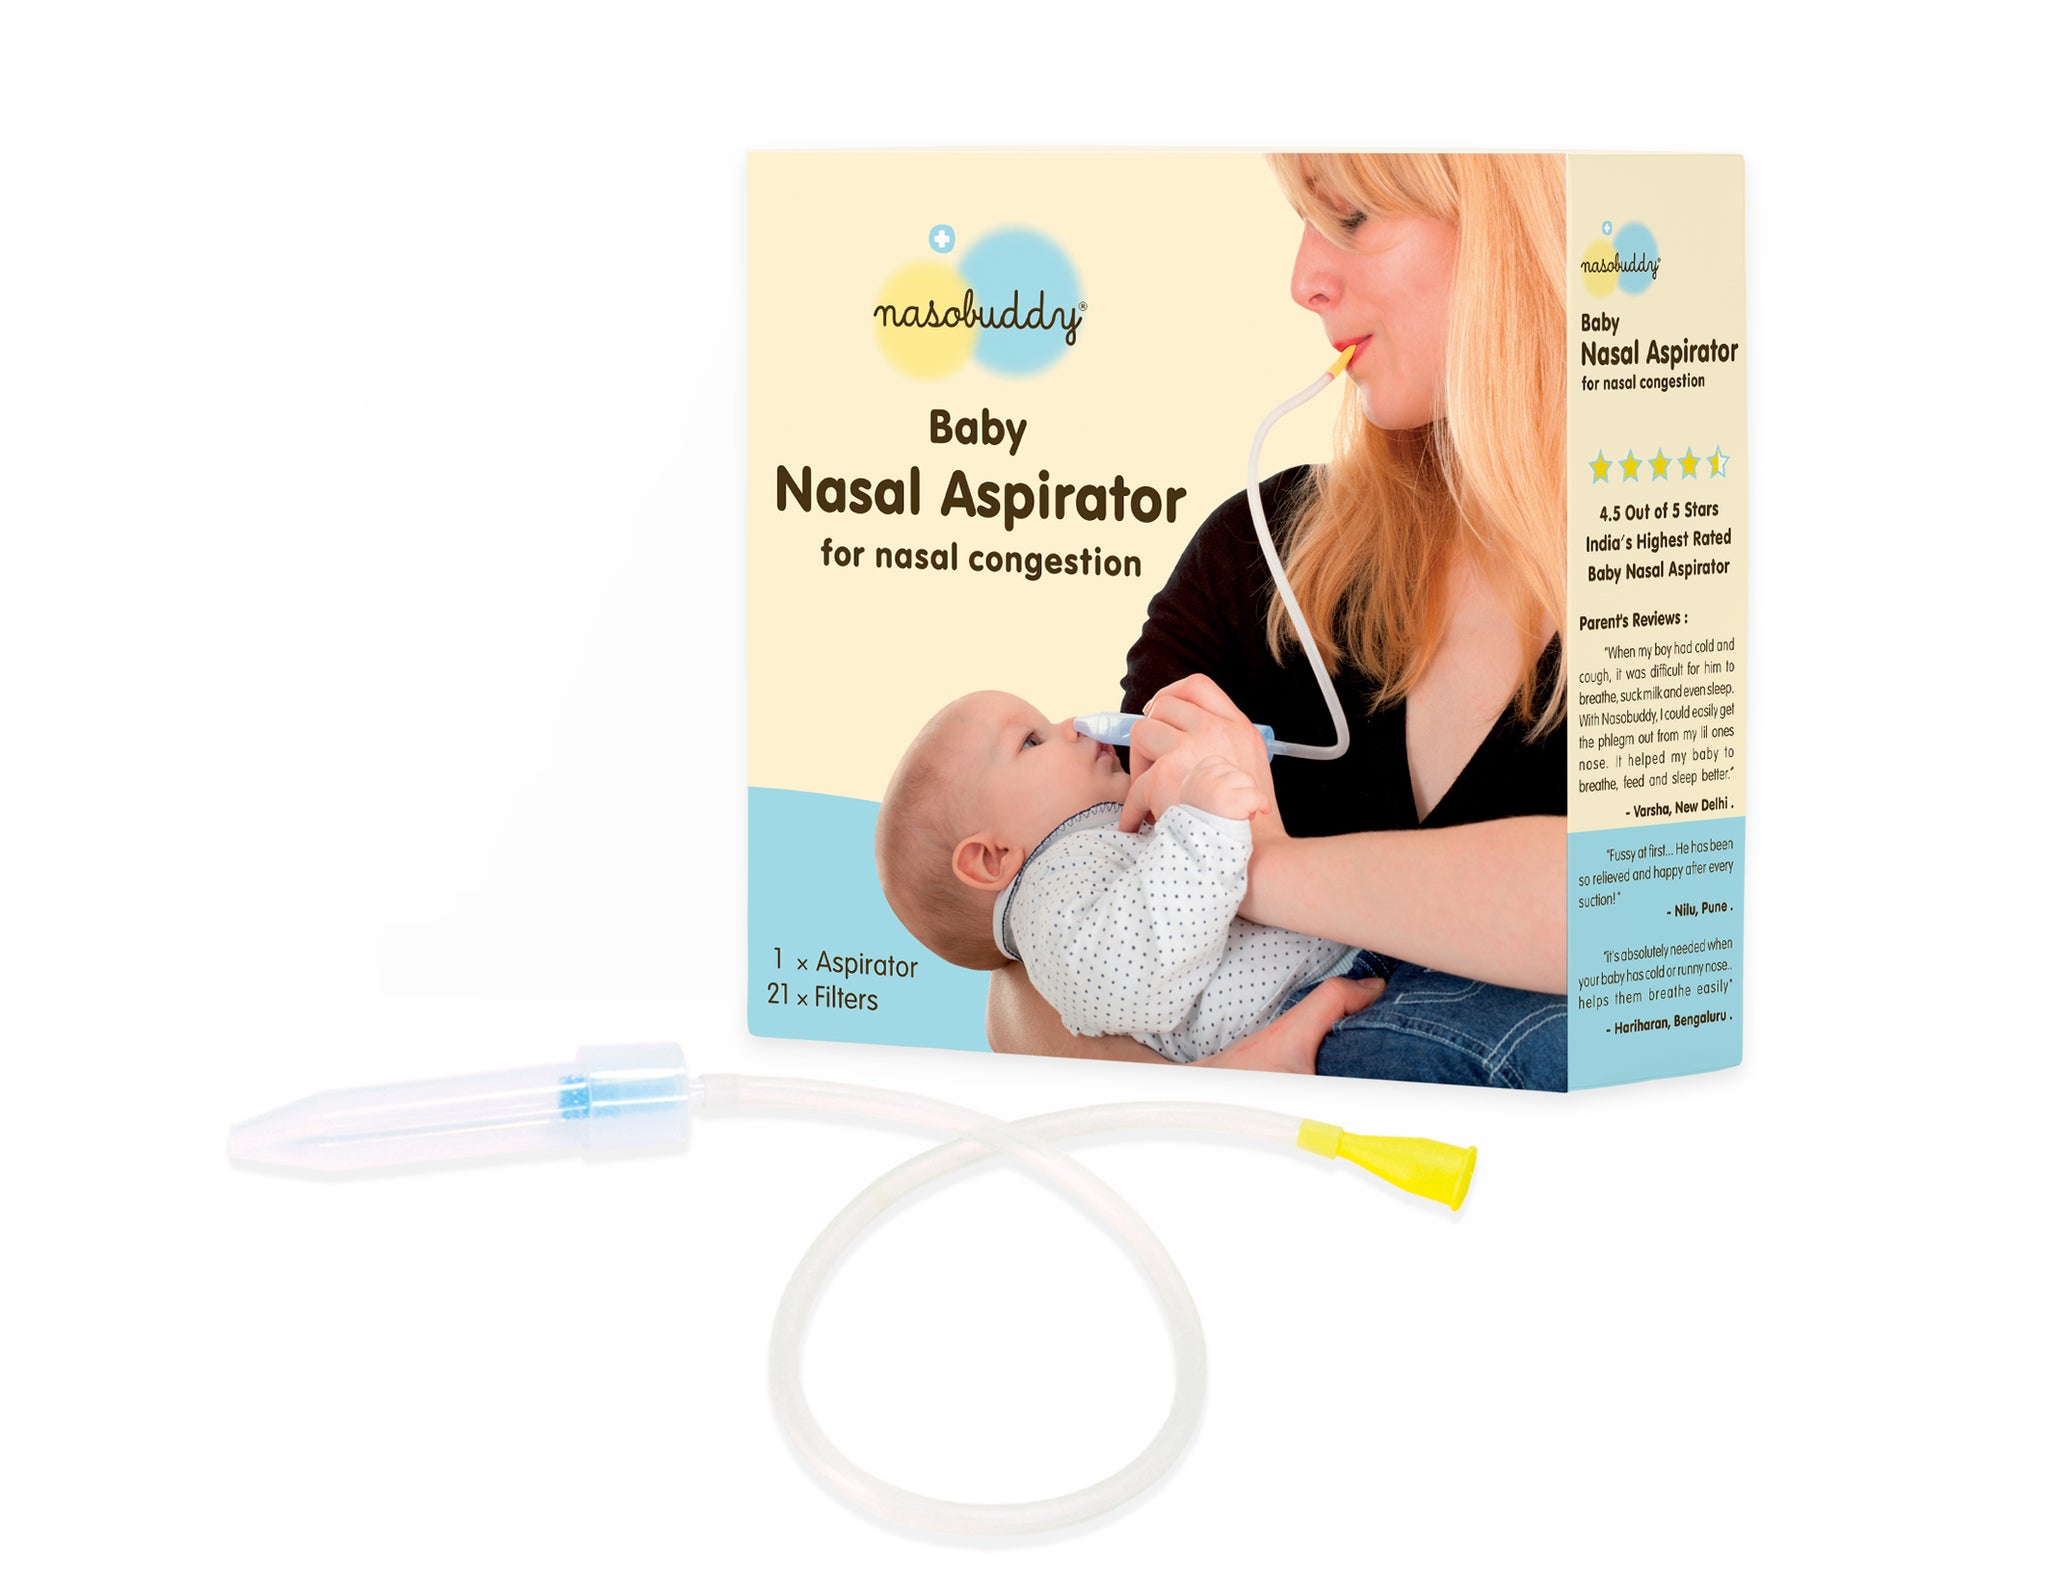 Nasal Aspirators: Are They Helpful?